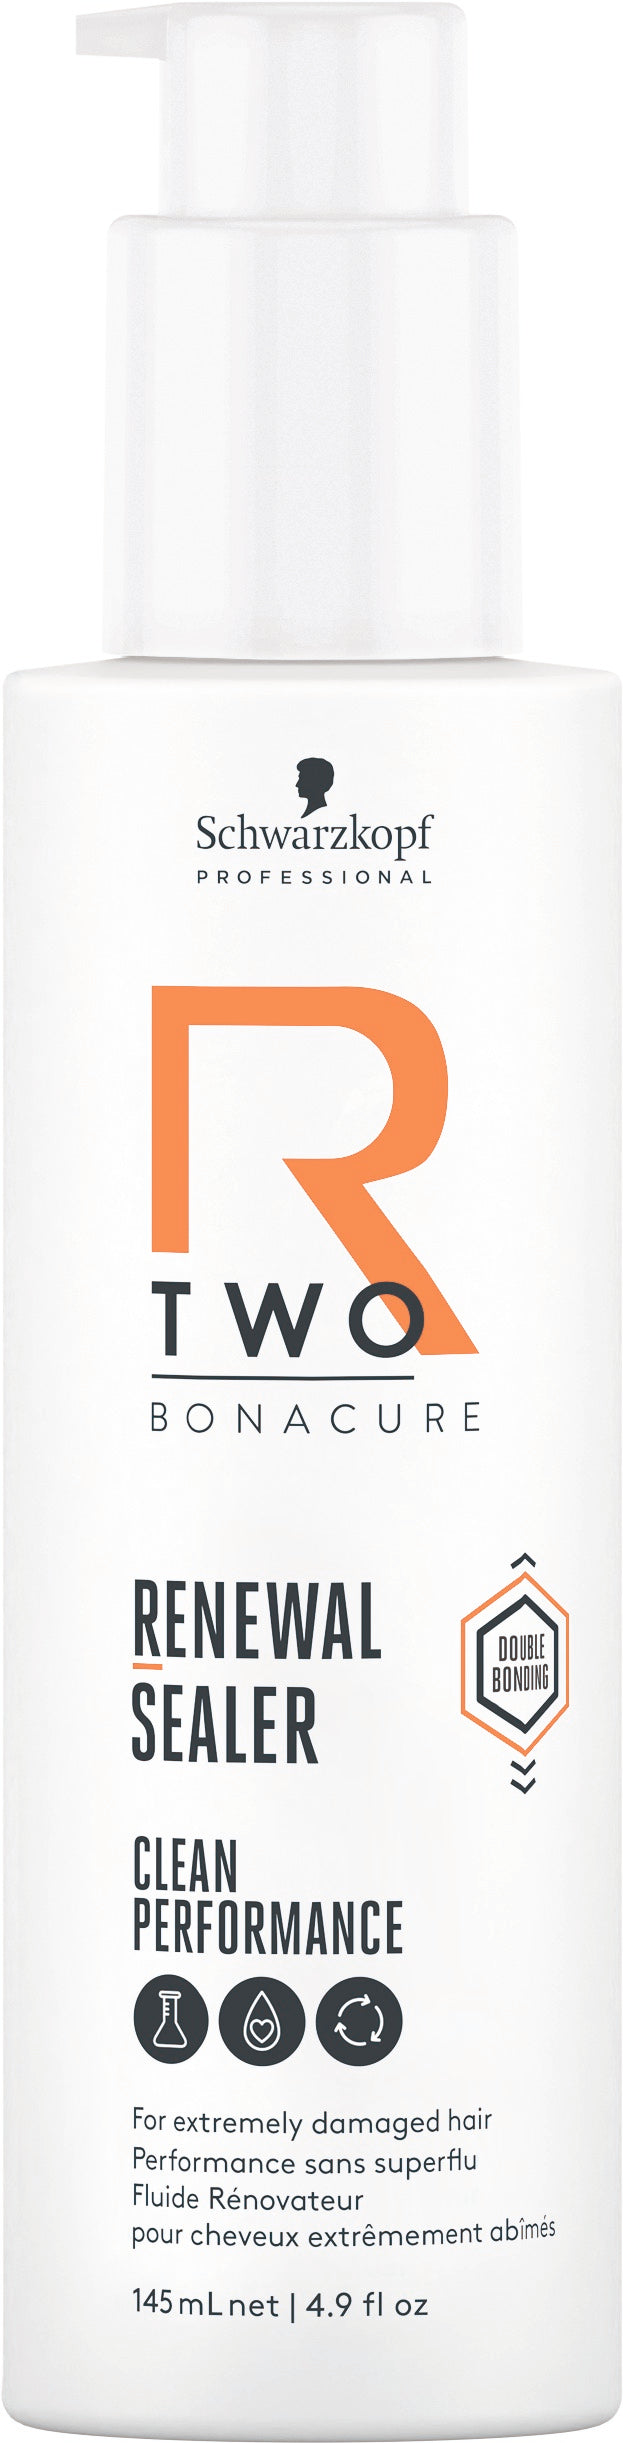 Schwarzkopf Professional Bonacure R-TWO Renewal Sealer at Eds Hair Bramhall